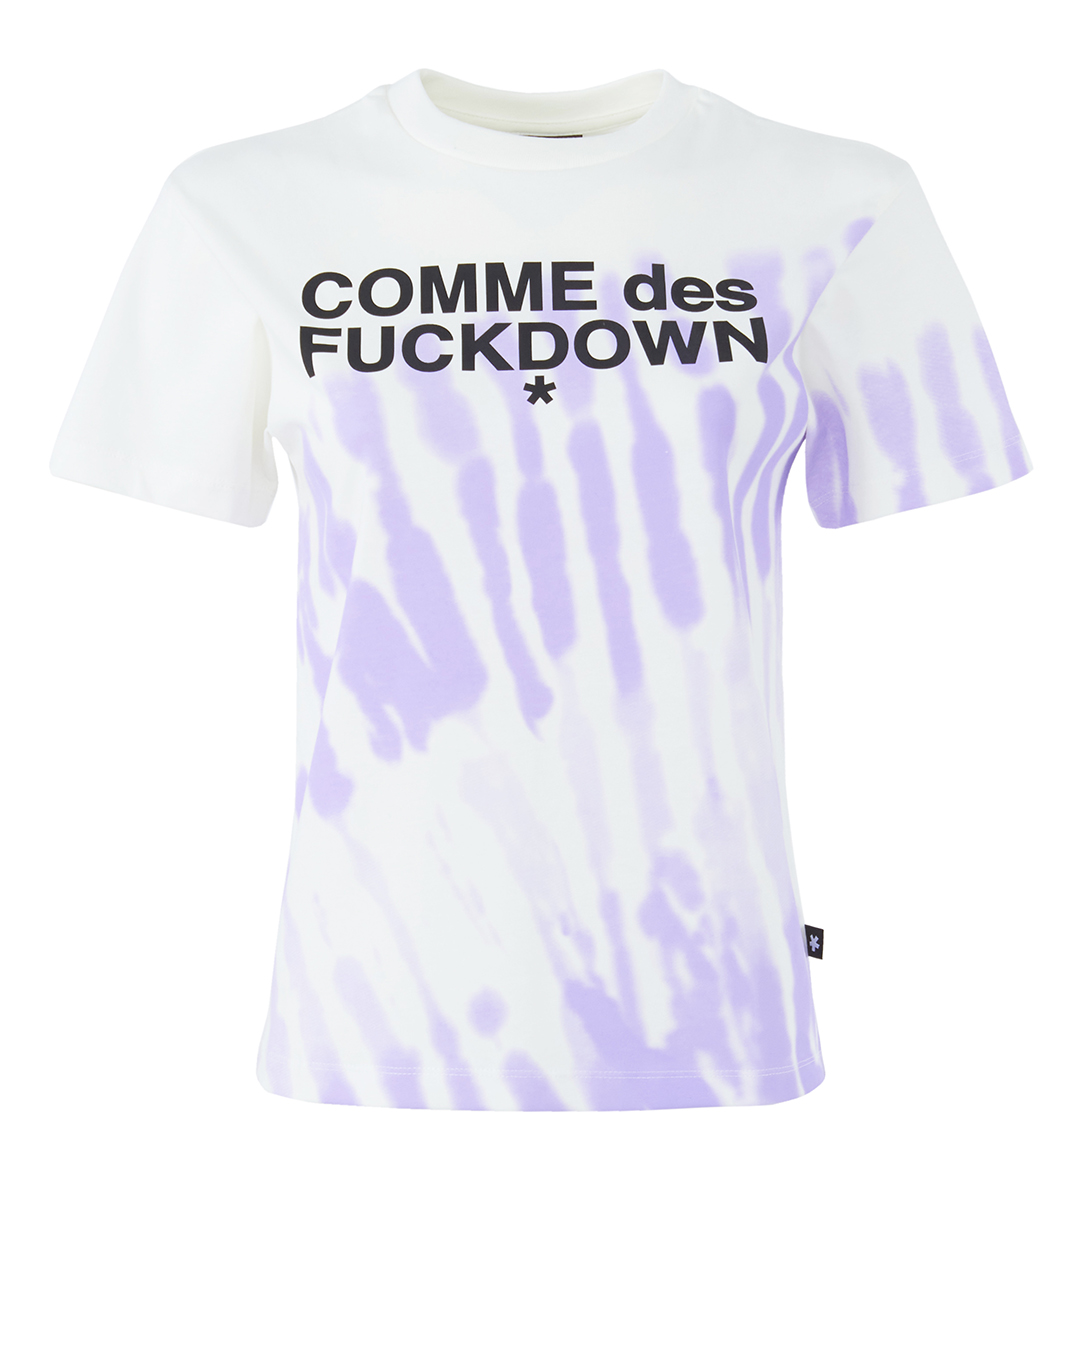 хлопковая футболка COMME des FUCKDOWN хлопковая футболка fradi